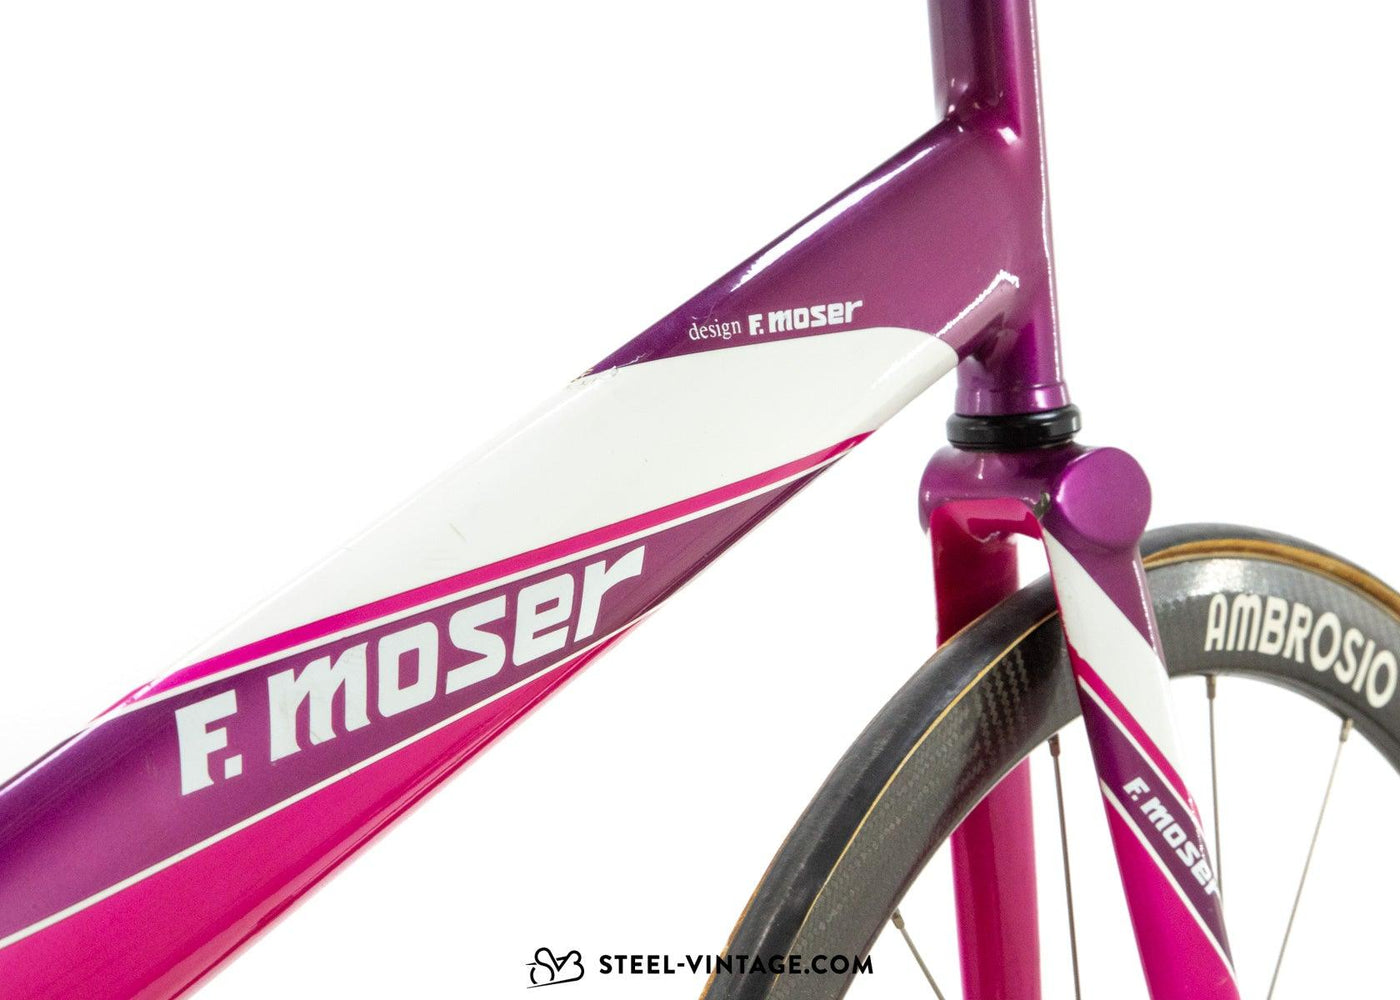 Francesco Moser Personal Veteran Hour Record Time Trial Bicycle 1994 - Steel Vintage Bikes